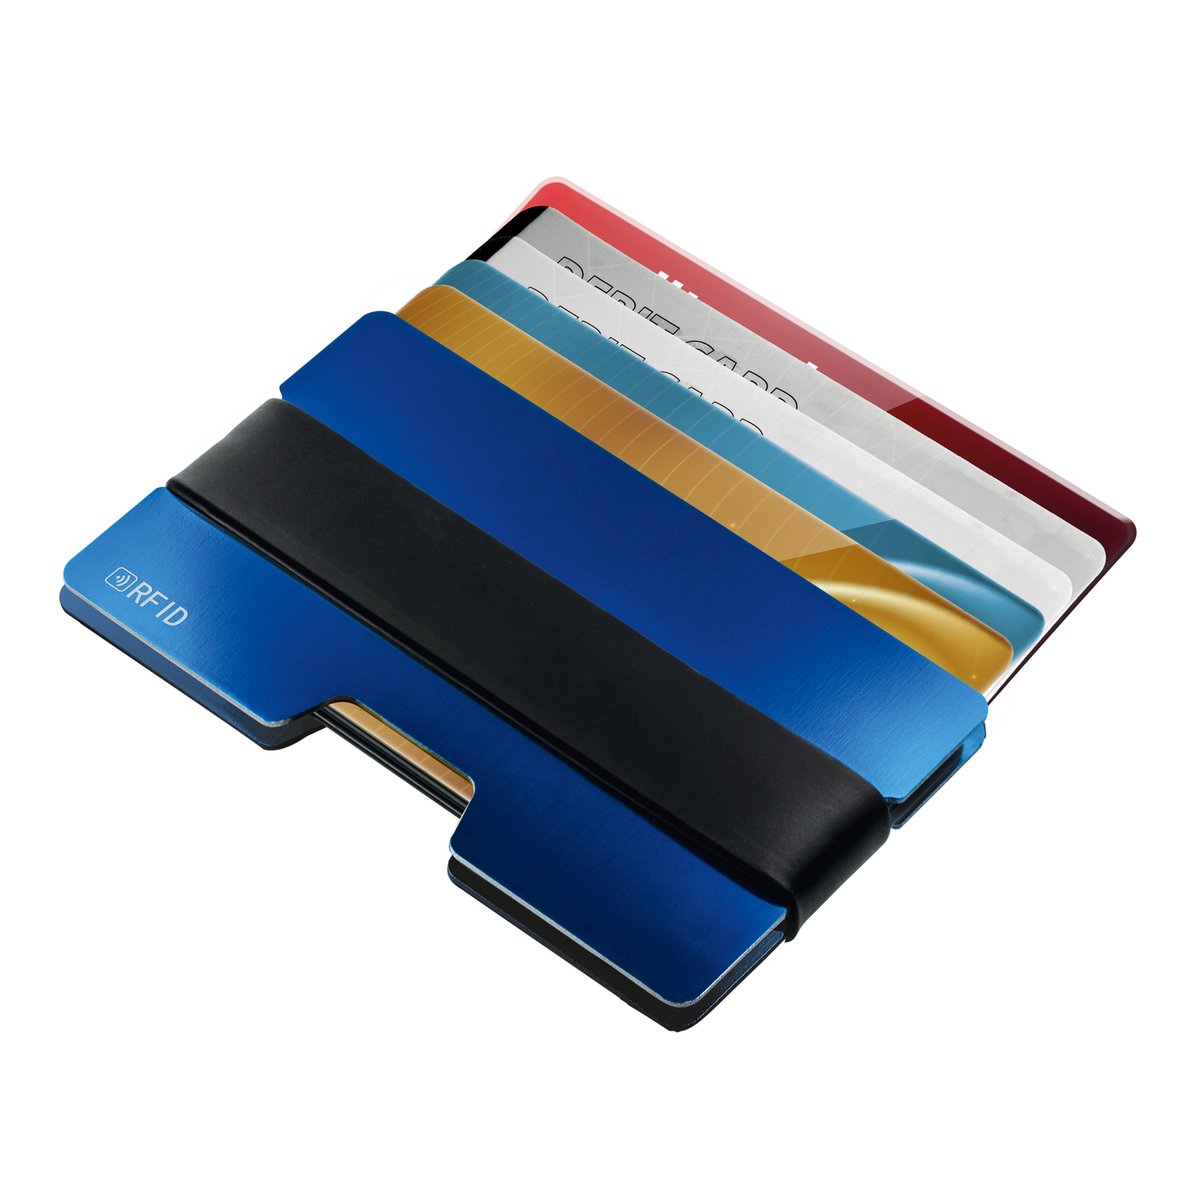 Porte-cartes avec protection RFID RE98-SAKUMONO bleu